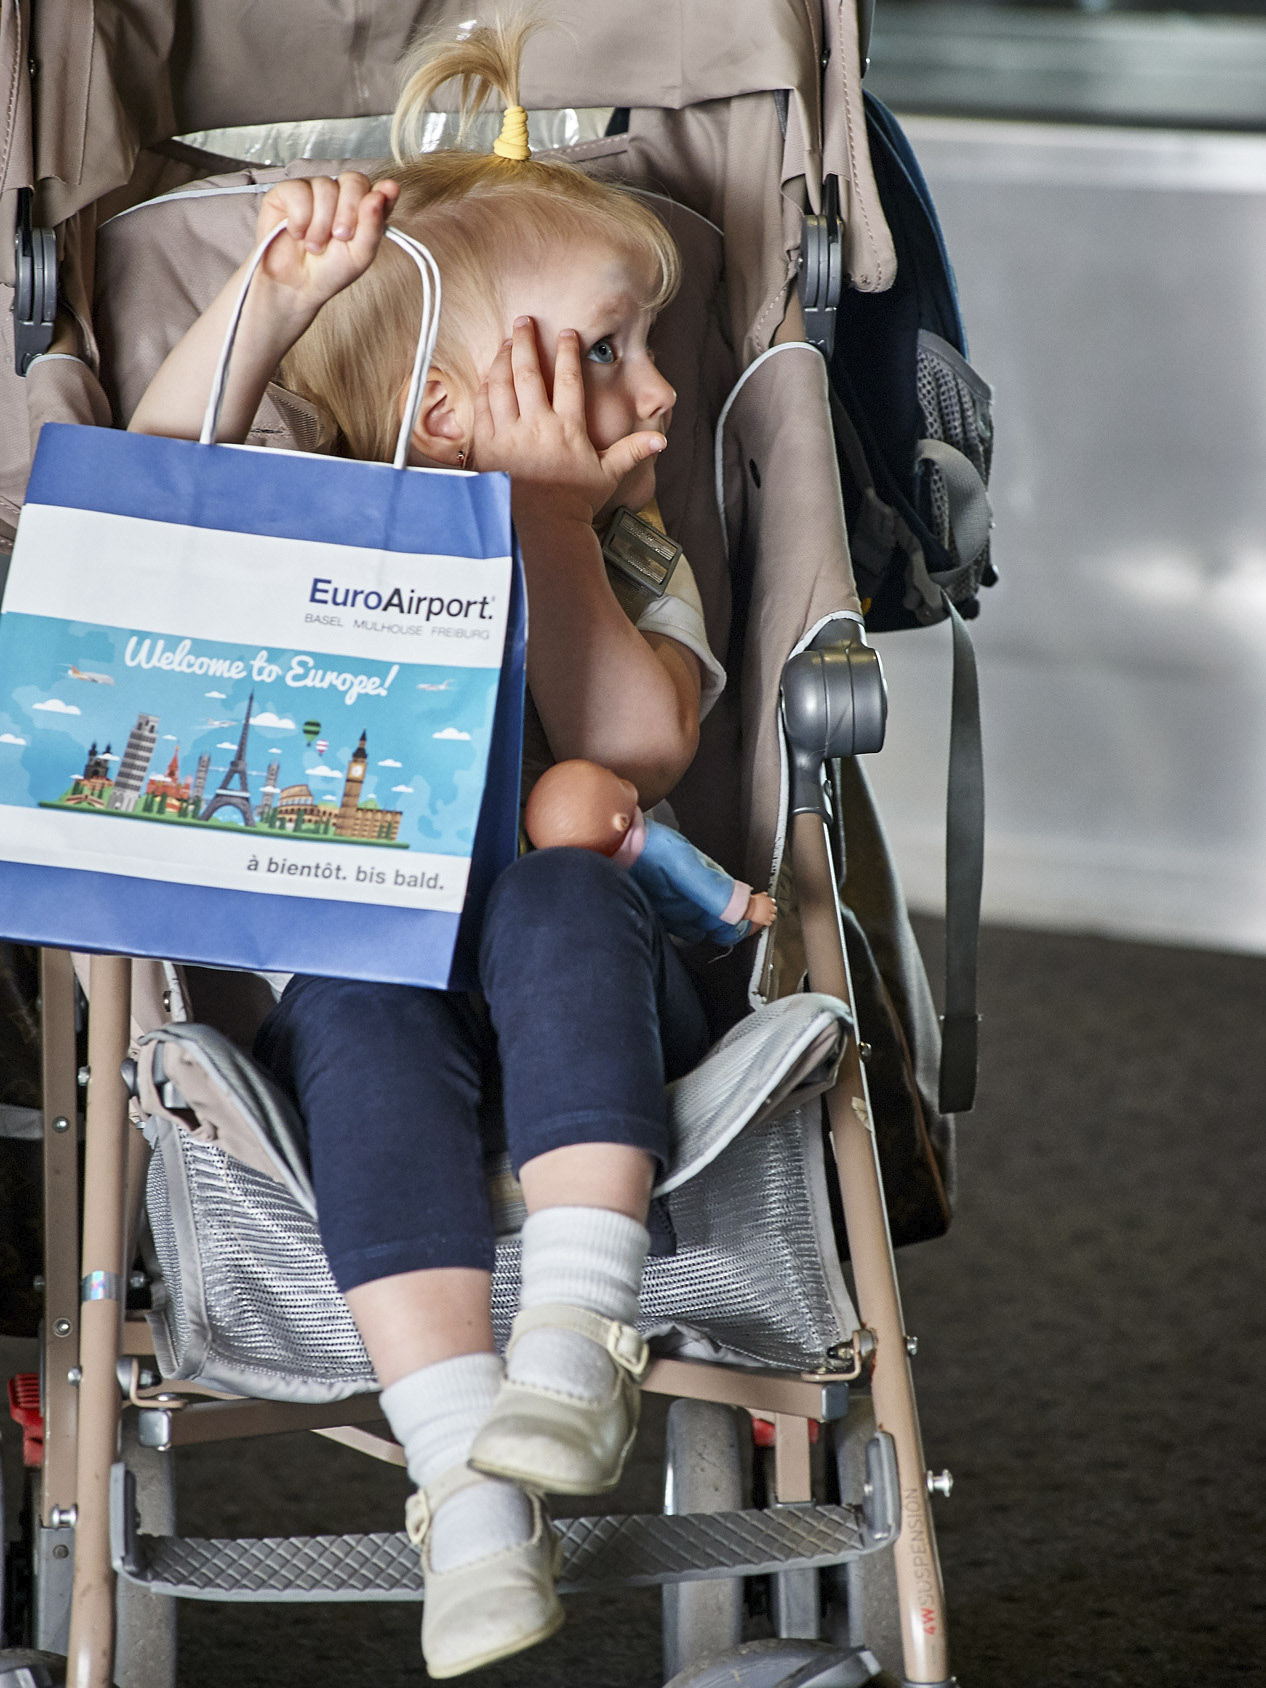 Beitragsbild Corporate, Reisefotografie, Flughafen, Basel Mulhouse, Euroairport, kind im Kinderwagen